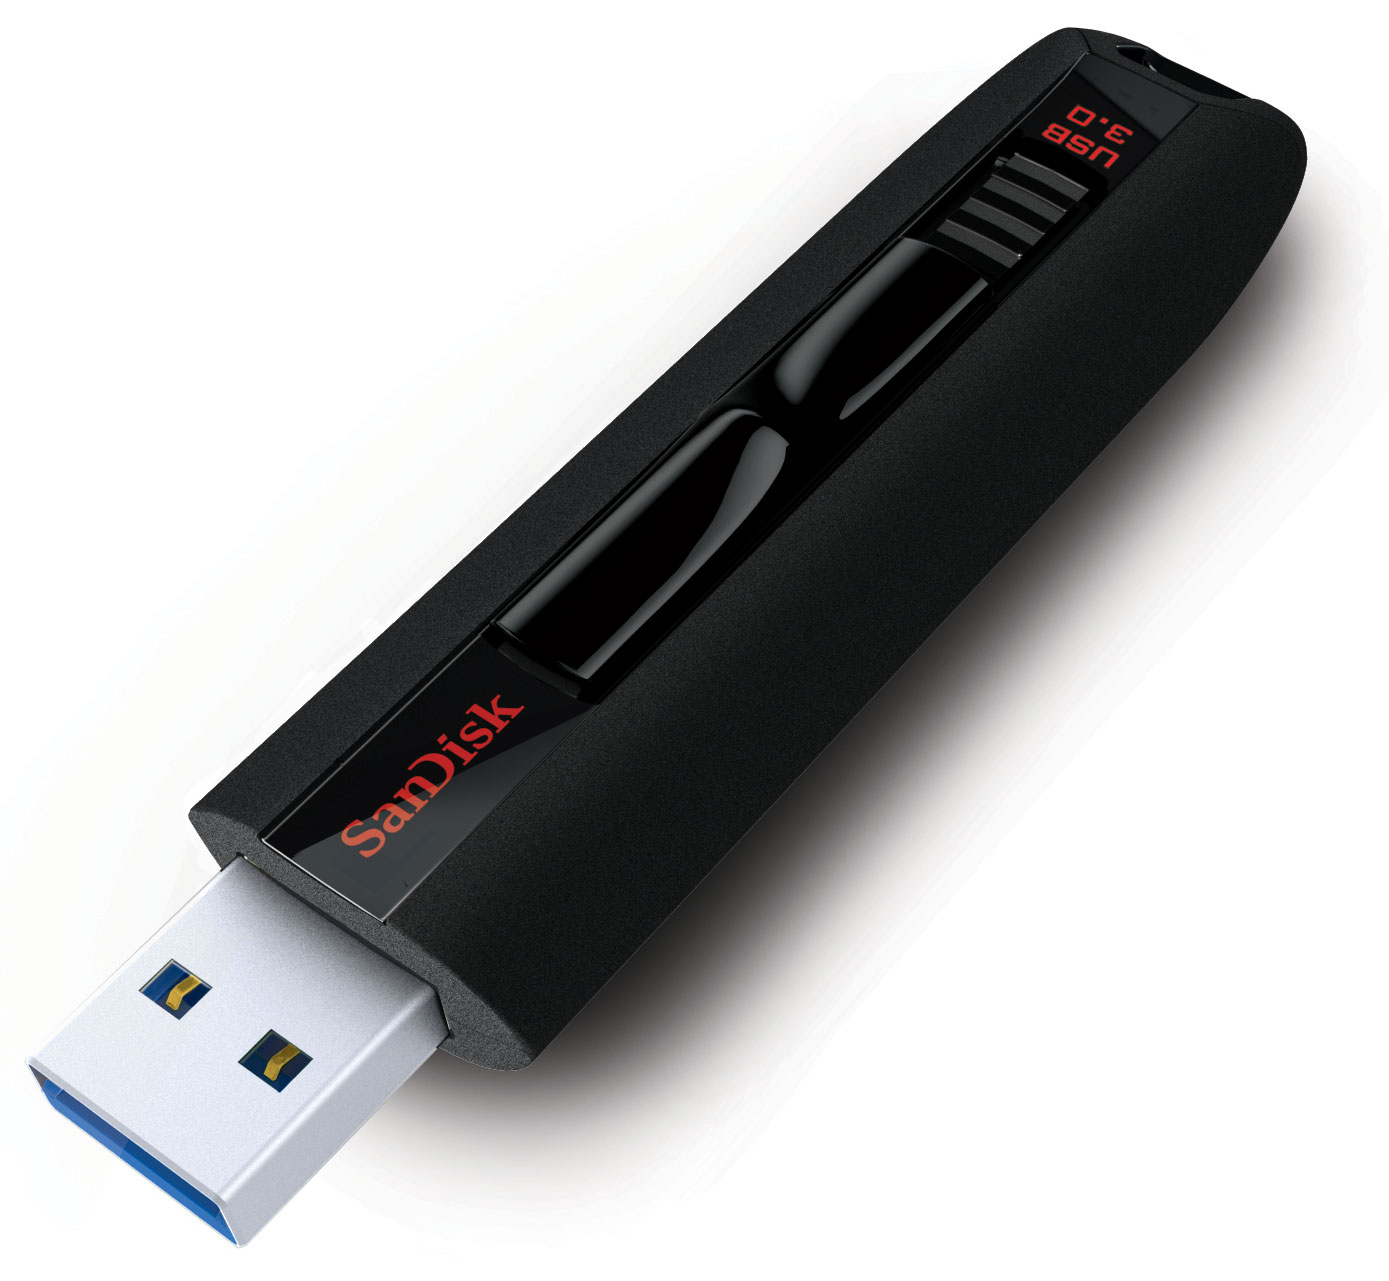 Extreme USB 3.0 Flash Drive - 64GB